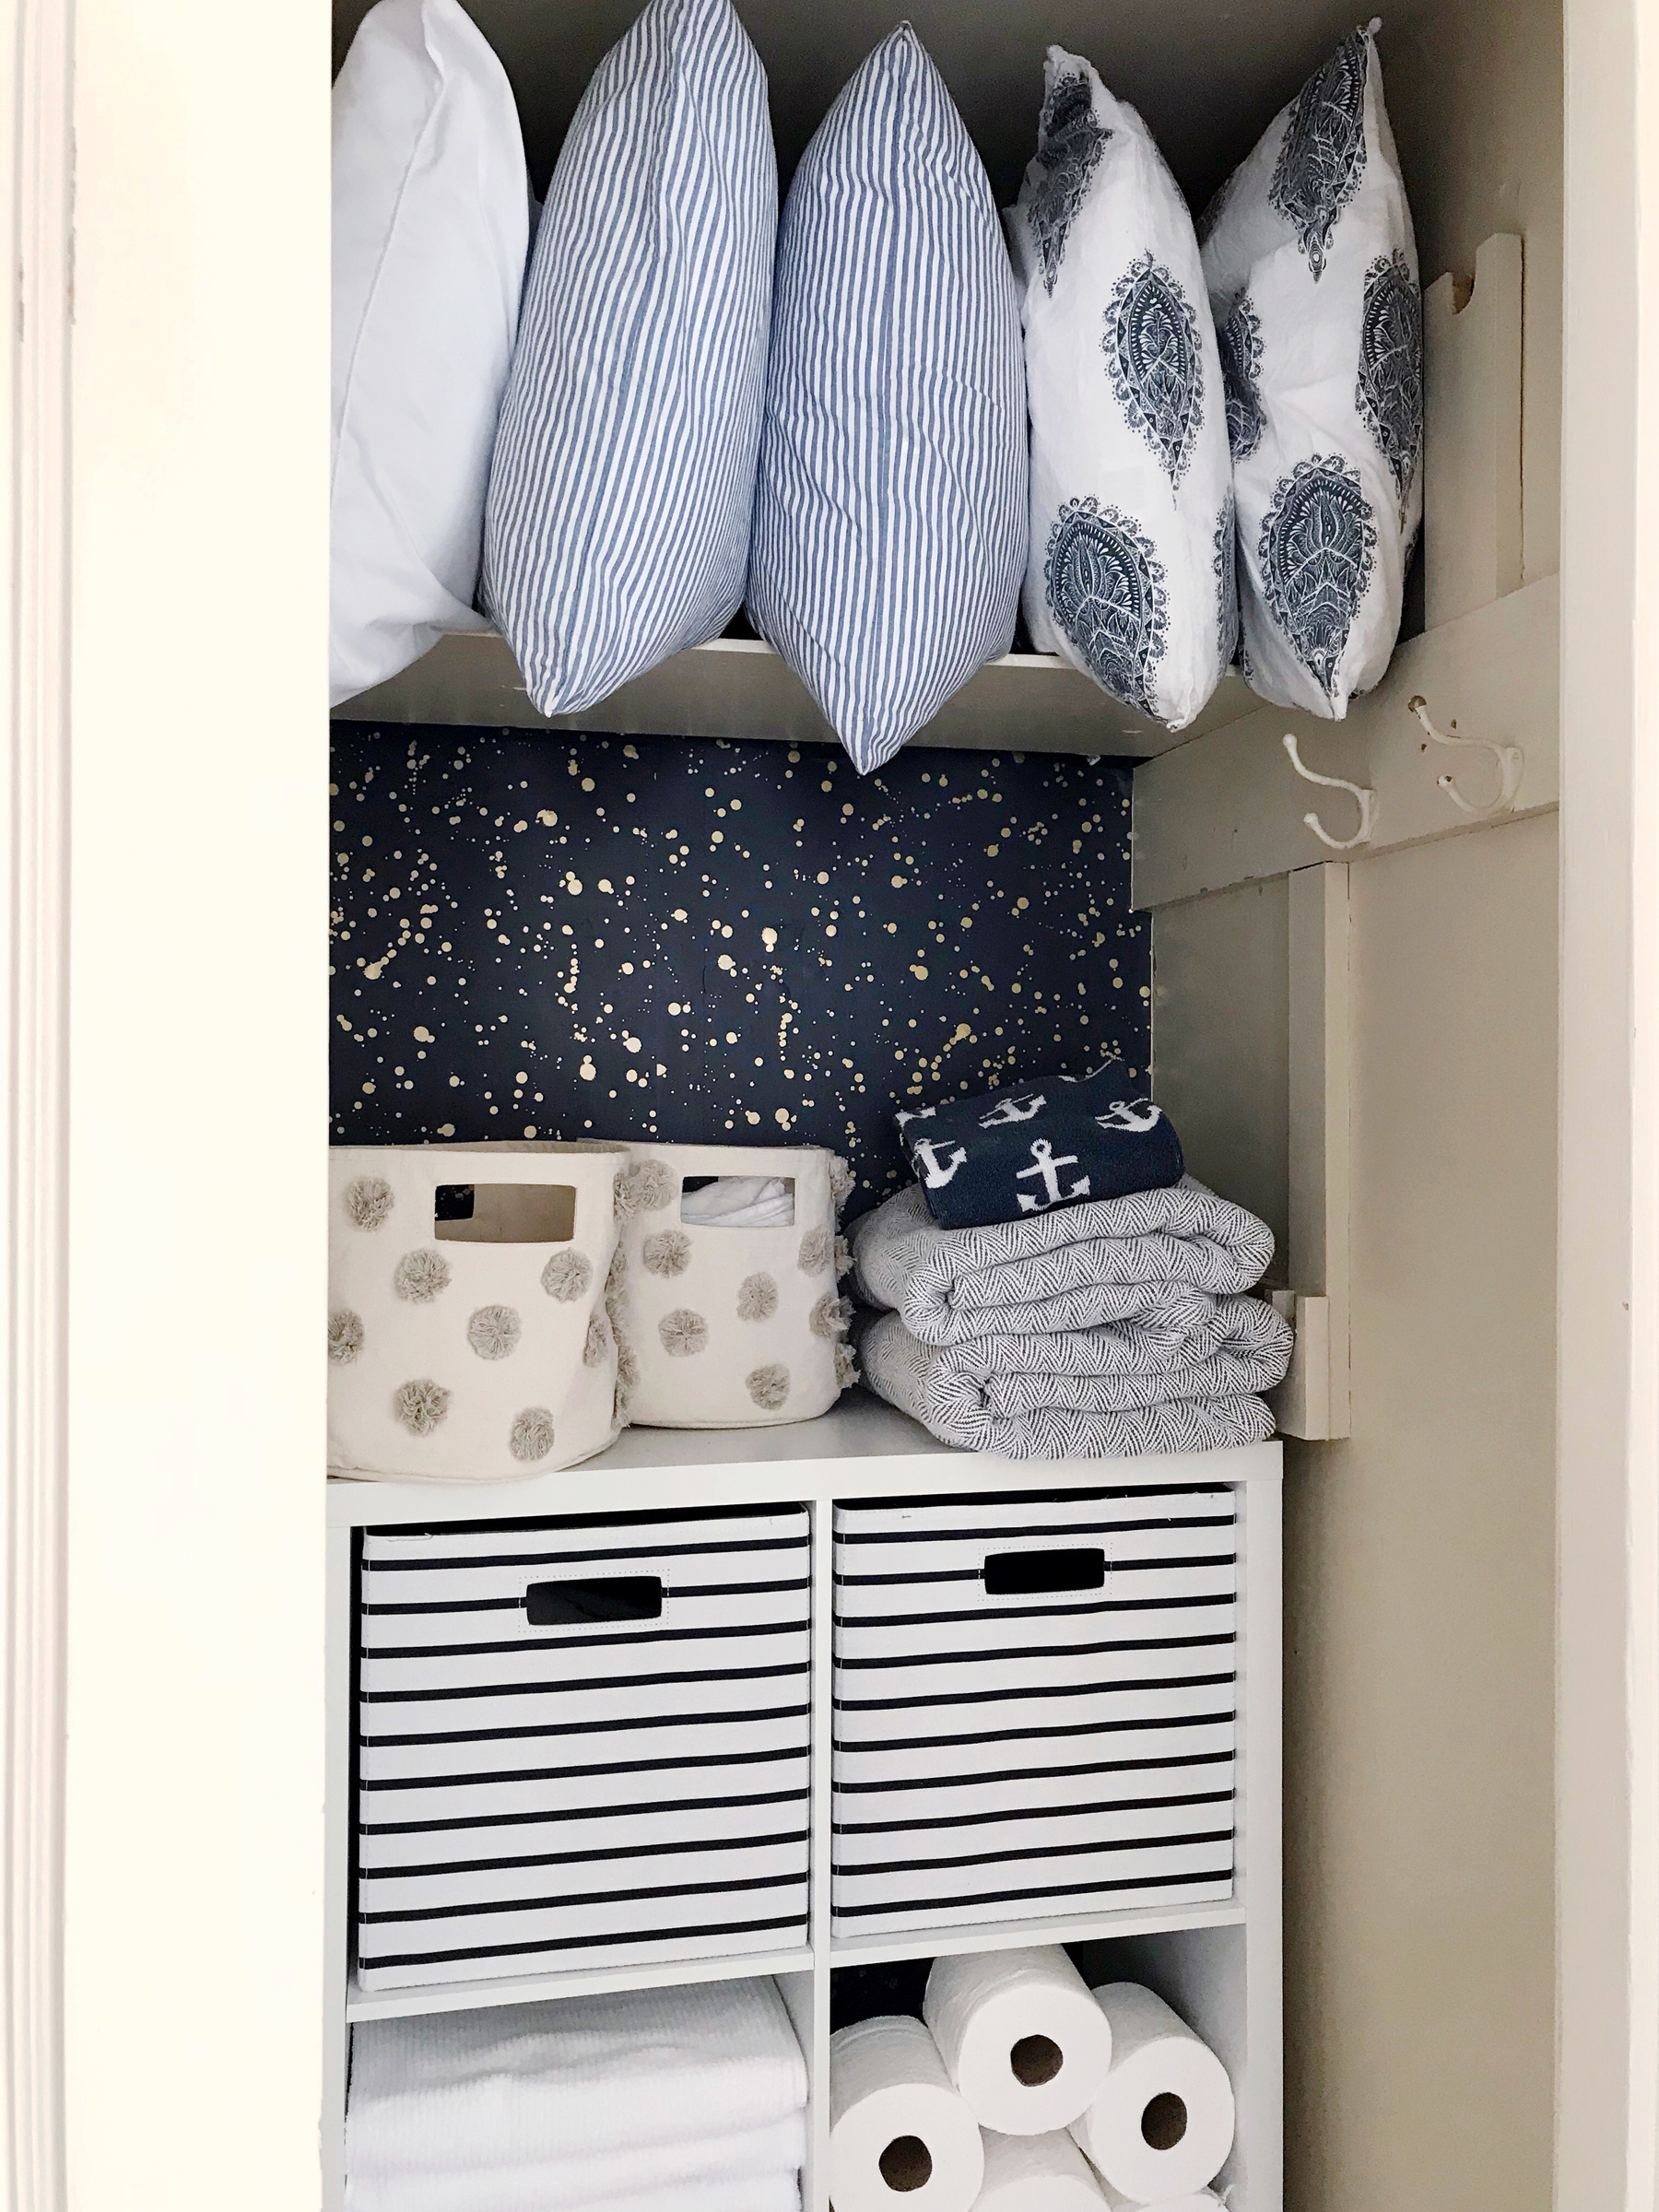 Organized Linen Closet Makeover